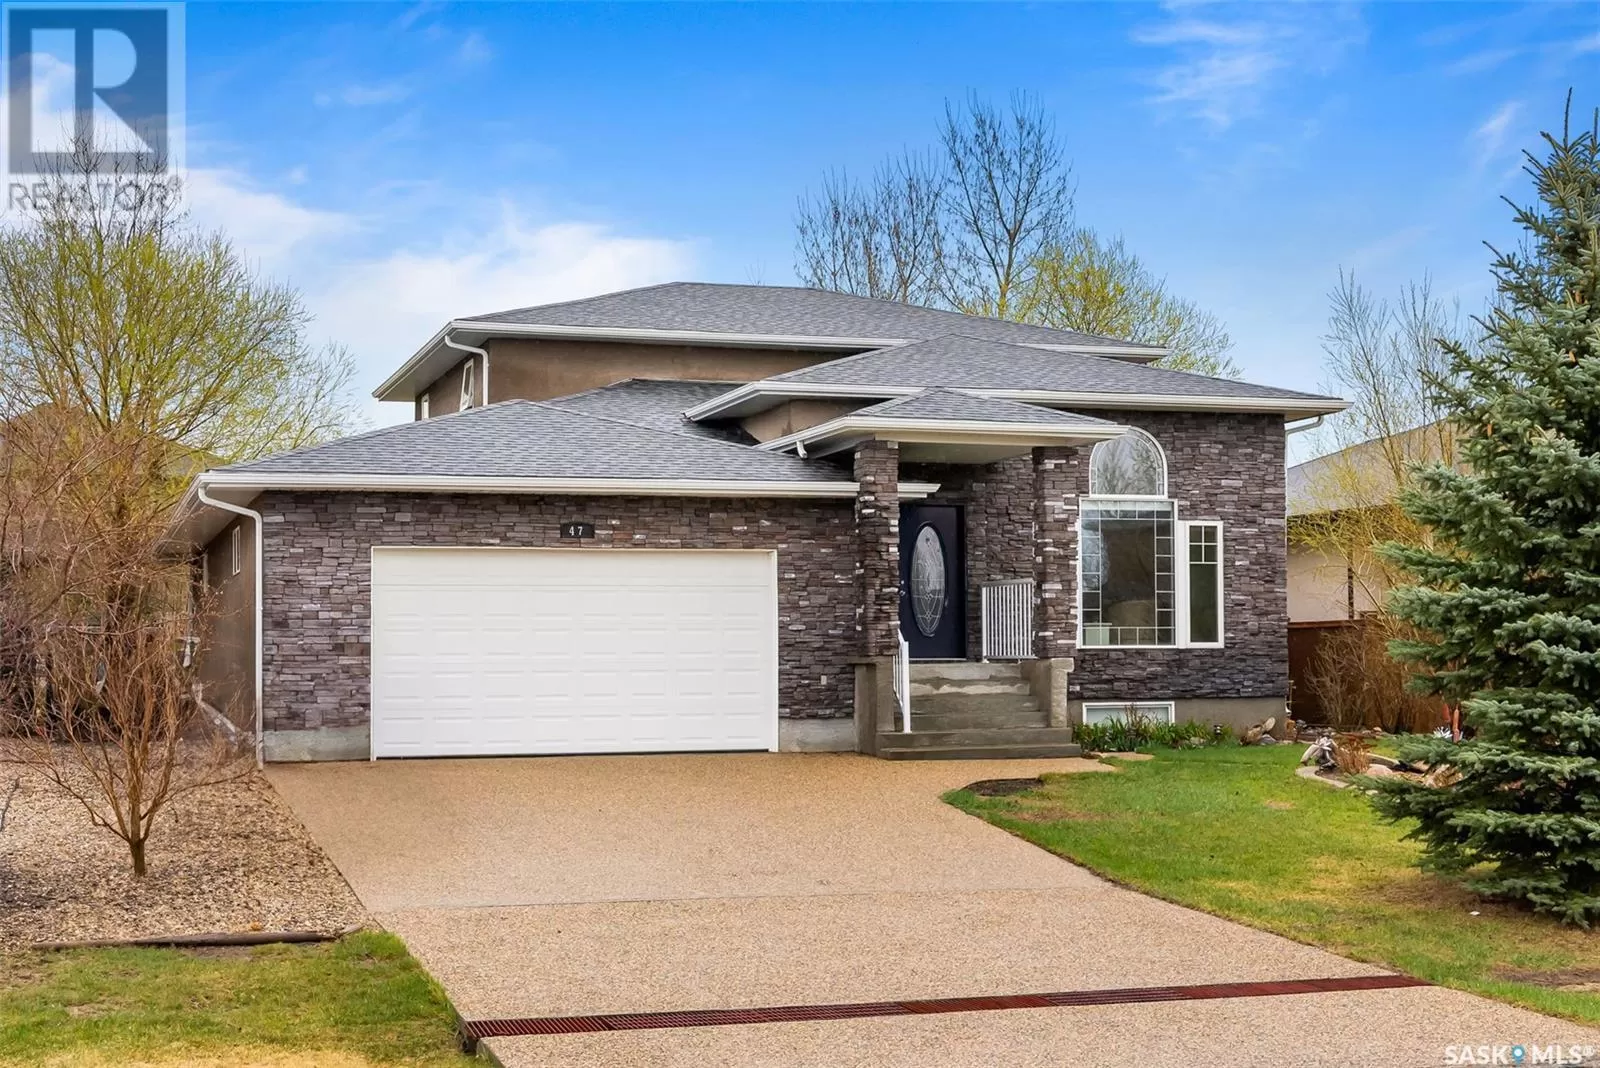 House for rent: 47 Emerald Creek Drive, White City, Saskatchewan S4L 0B1